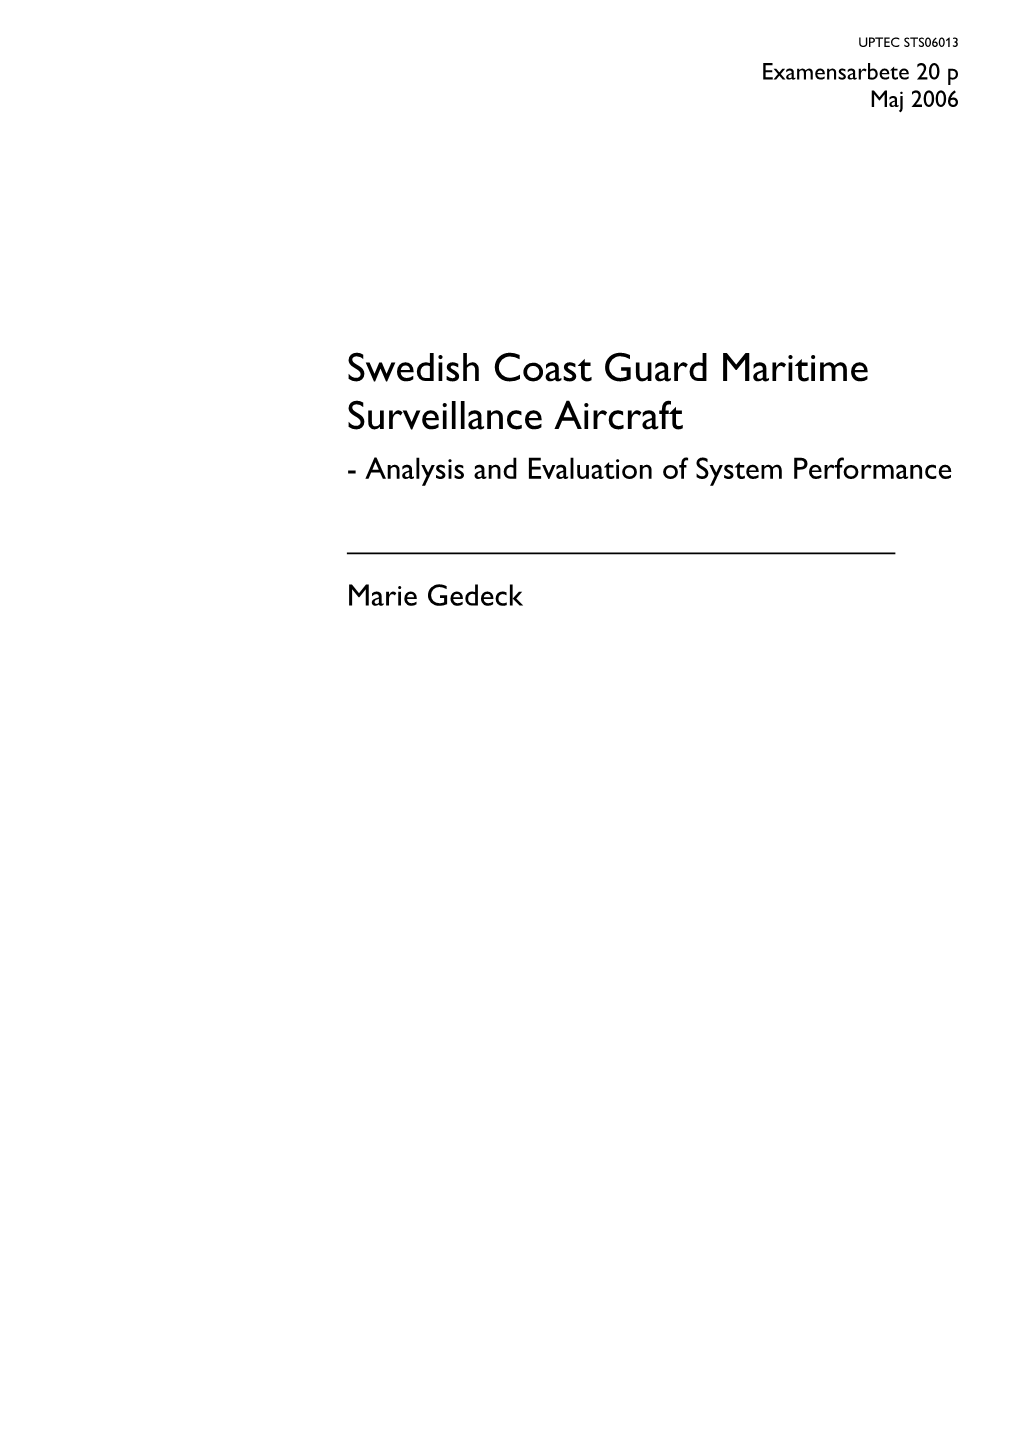 Swedish Coast Guard Maritime Surveillance Aircraft - Analysis and Evaluation of System Performance